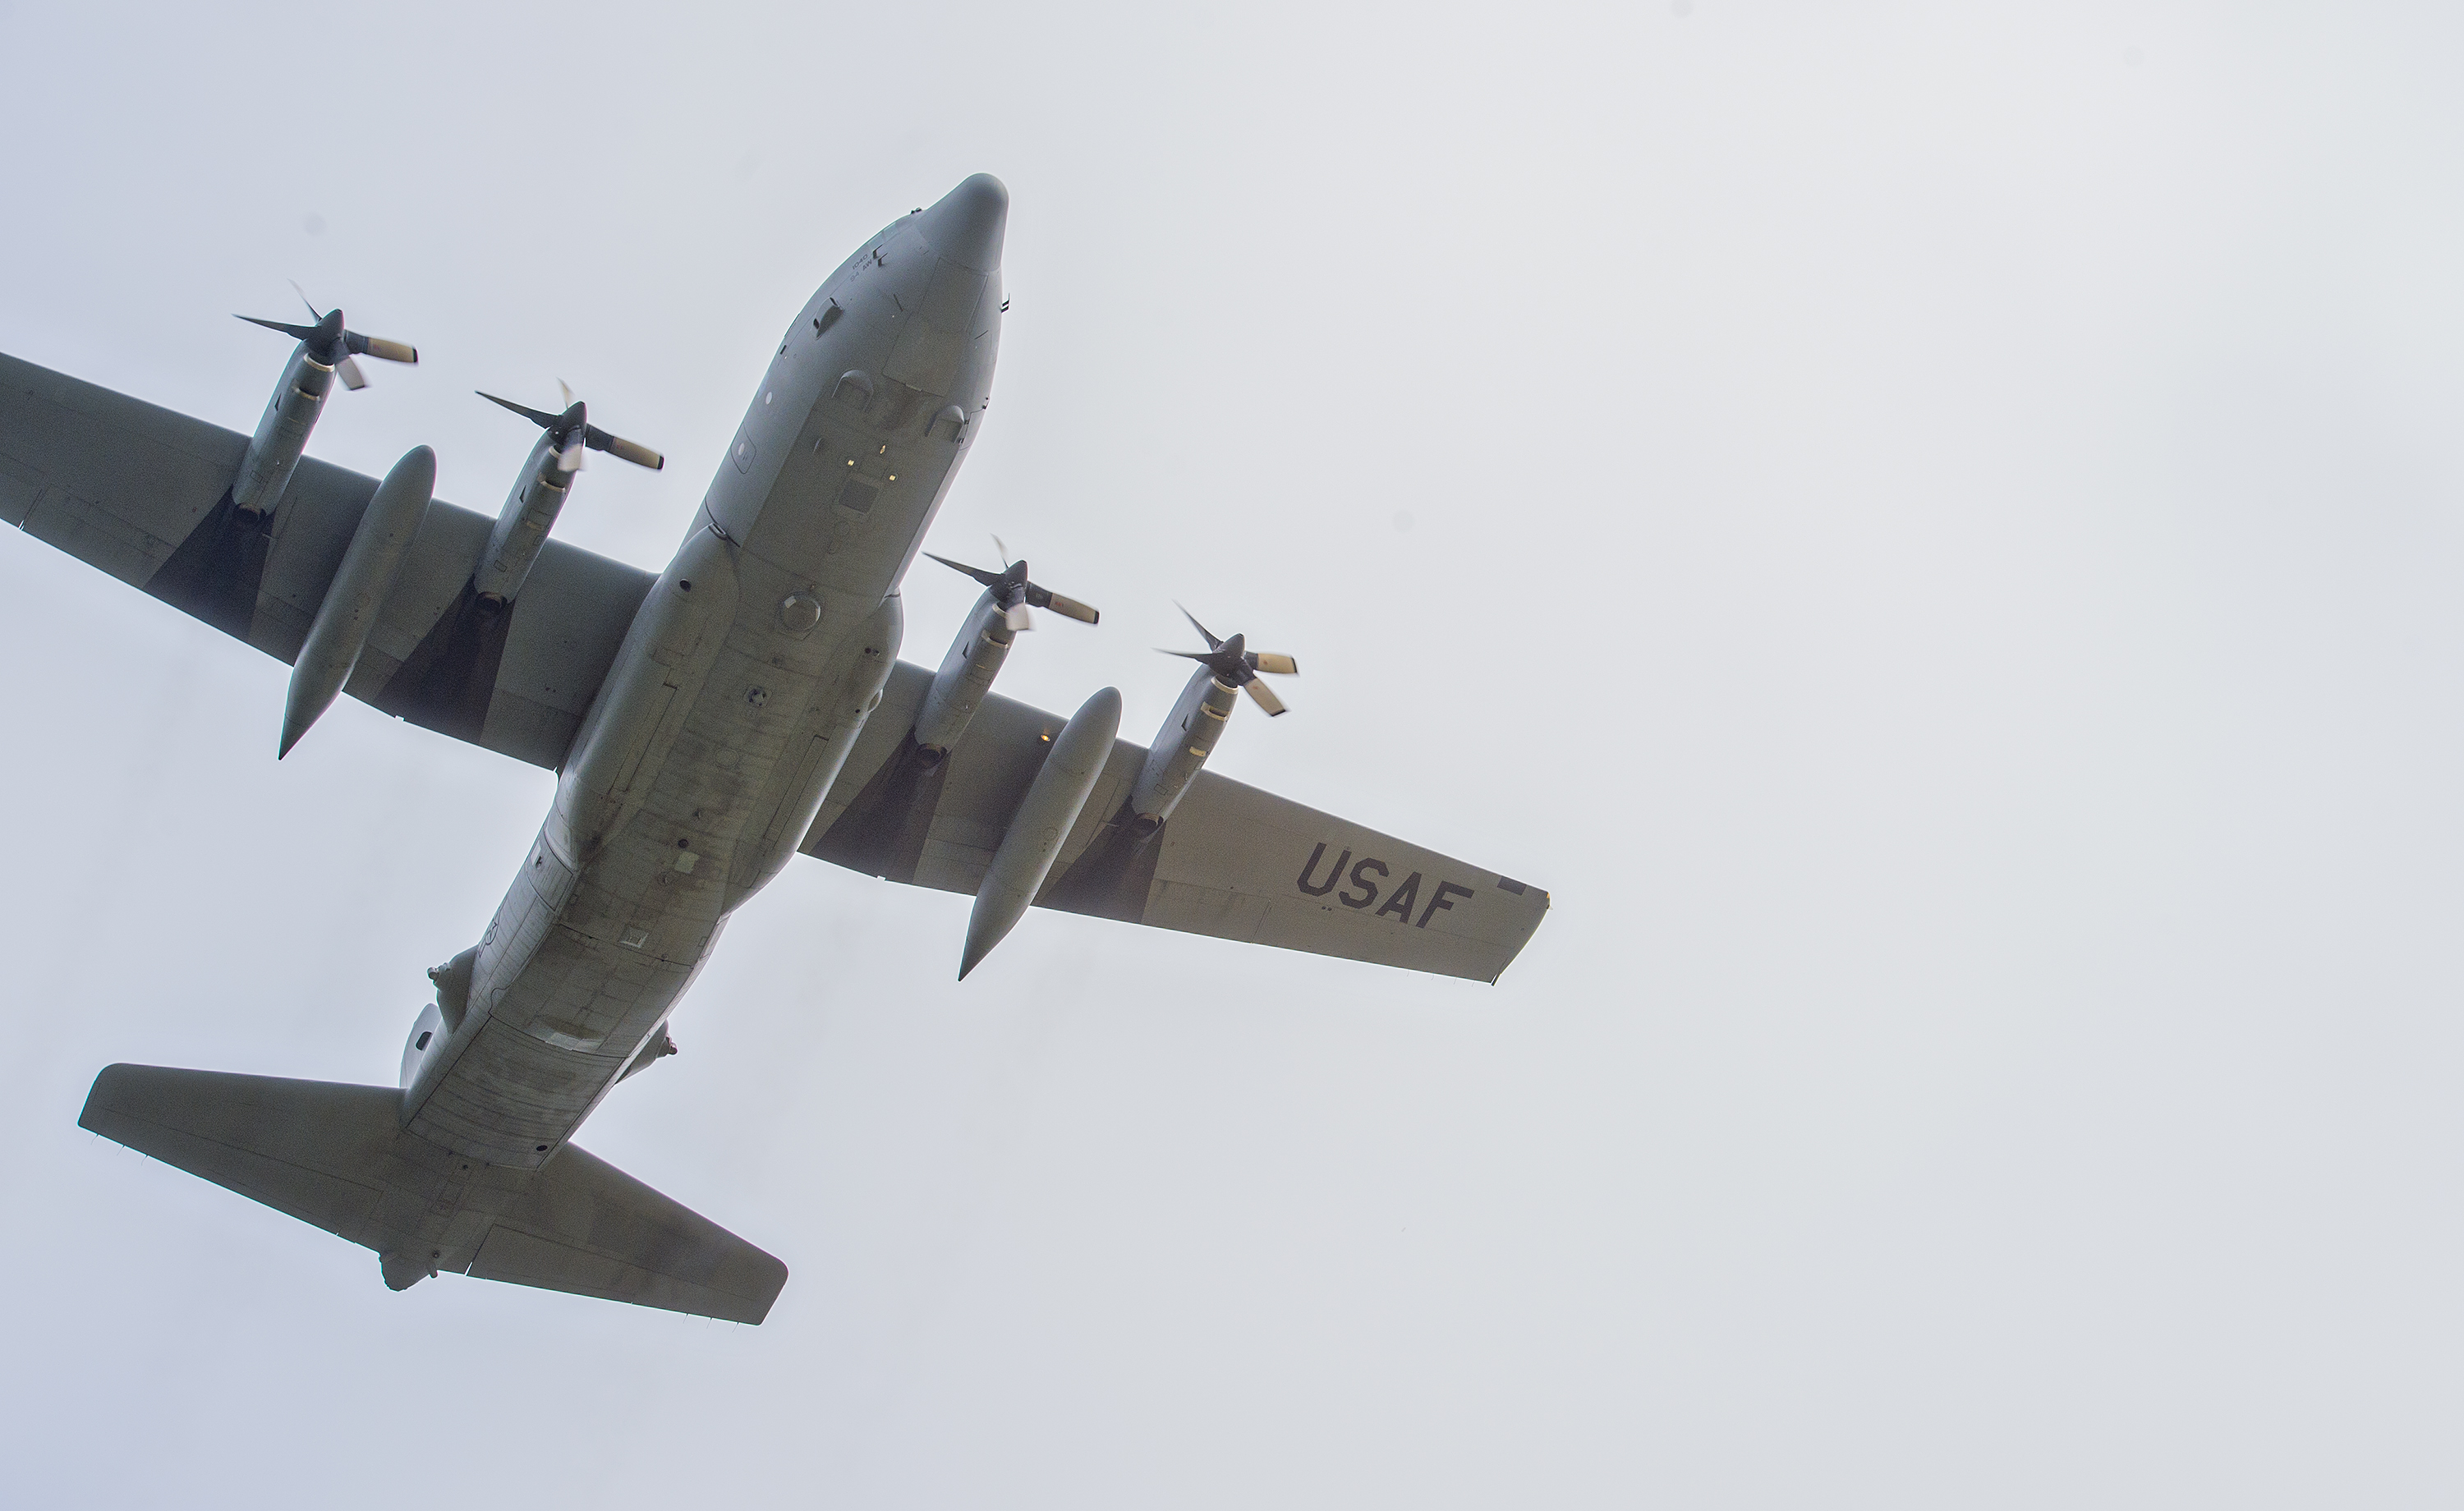 C 130 Hercules The Lockheed Military Plane That Crashed In Savannah